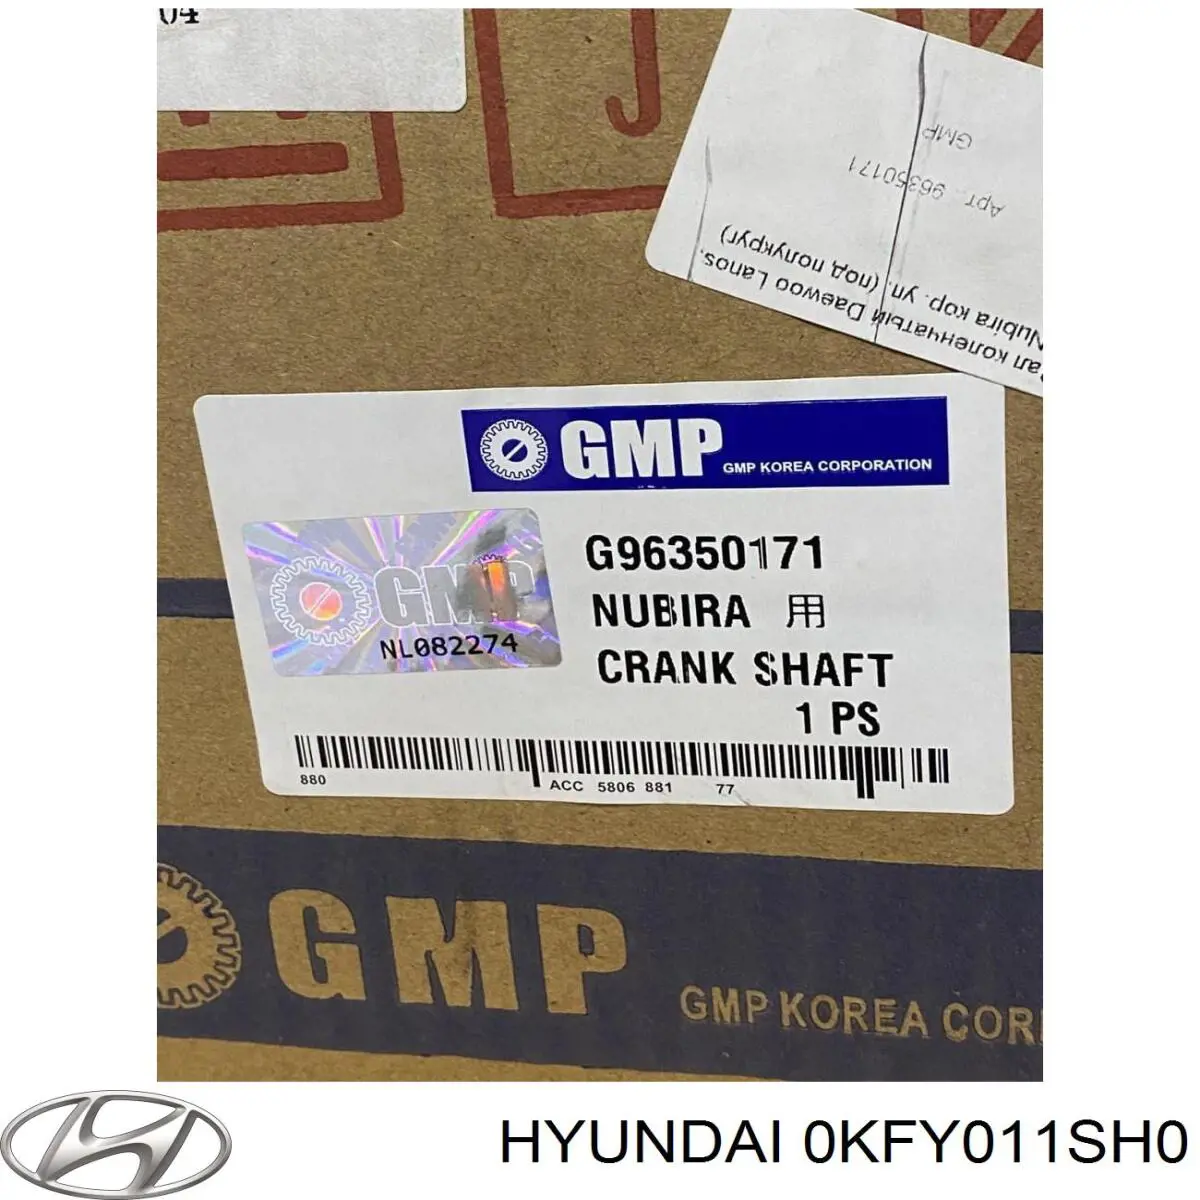 0KFY011SH0 Hyundai/Kia вкладыши коленвала коренные, комплект, 1-й ремонт (+0,25)